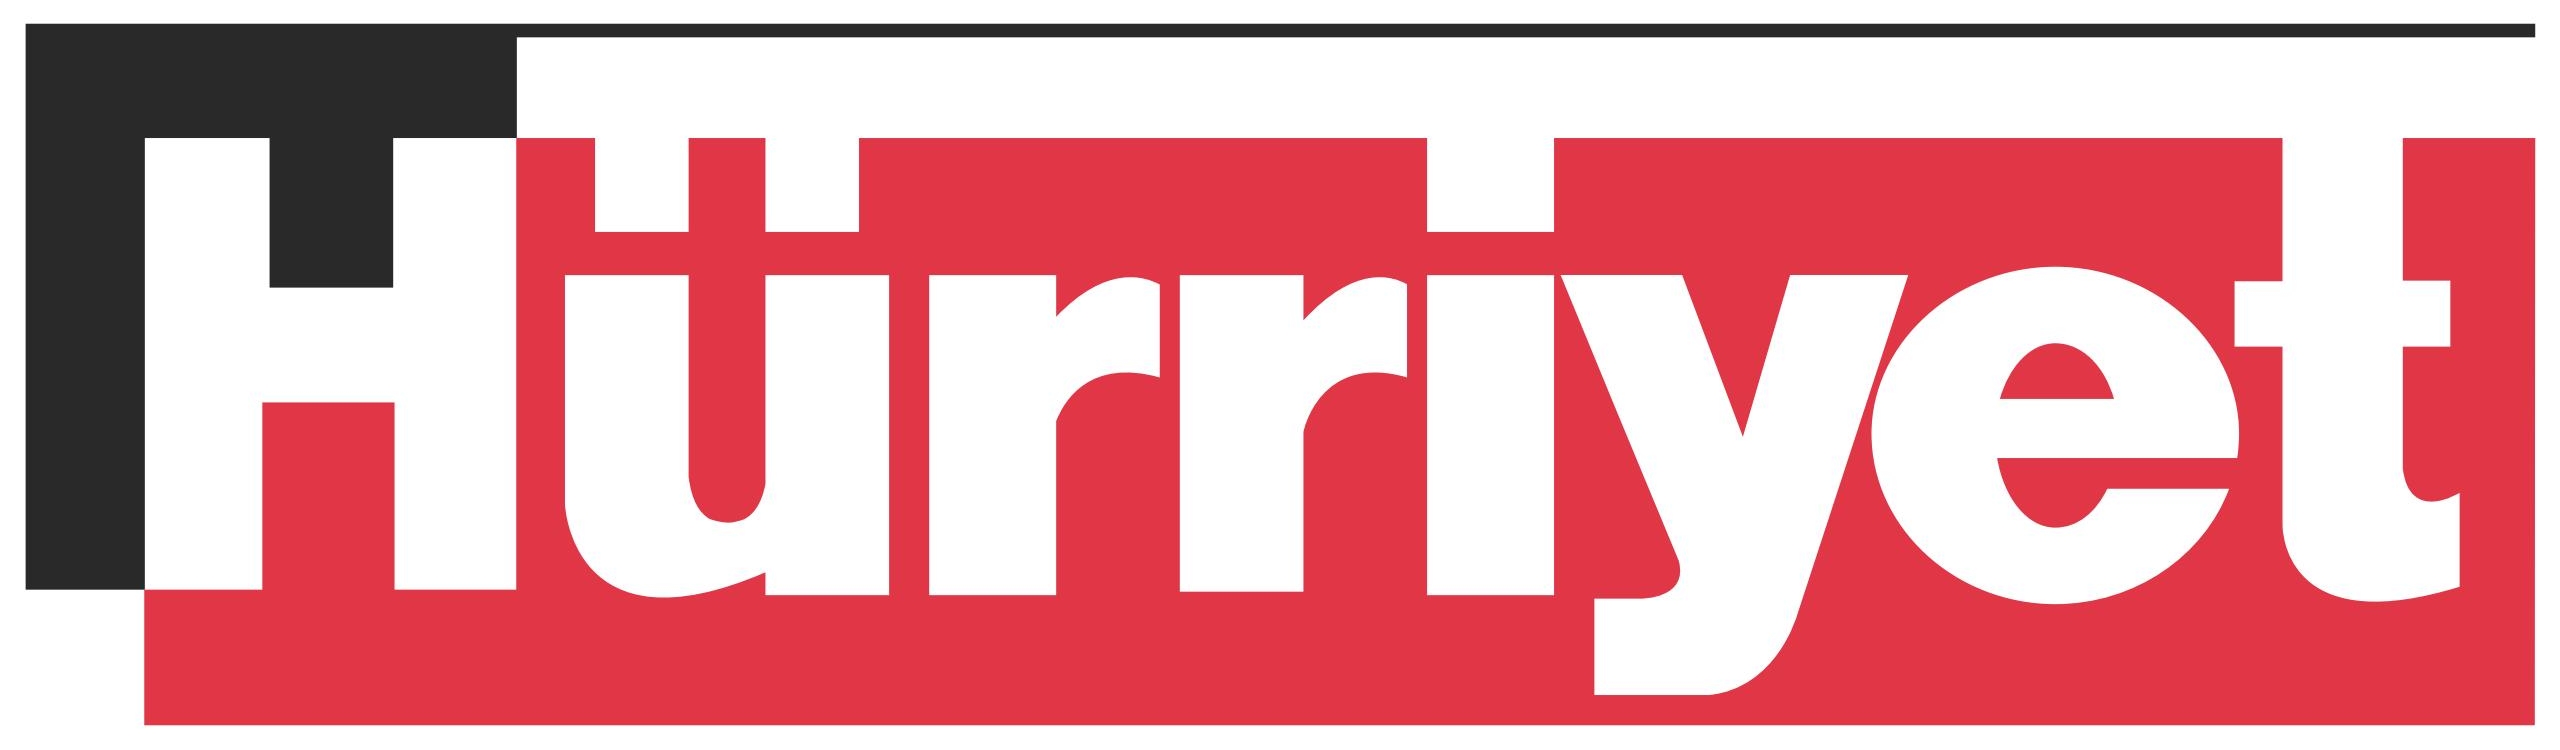 Hurriyet Brand Logo